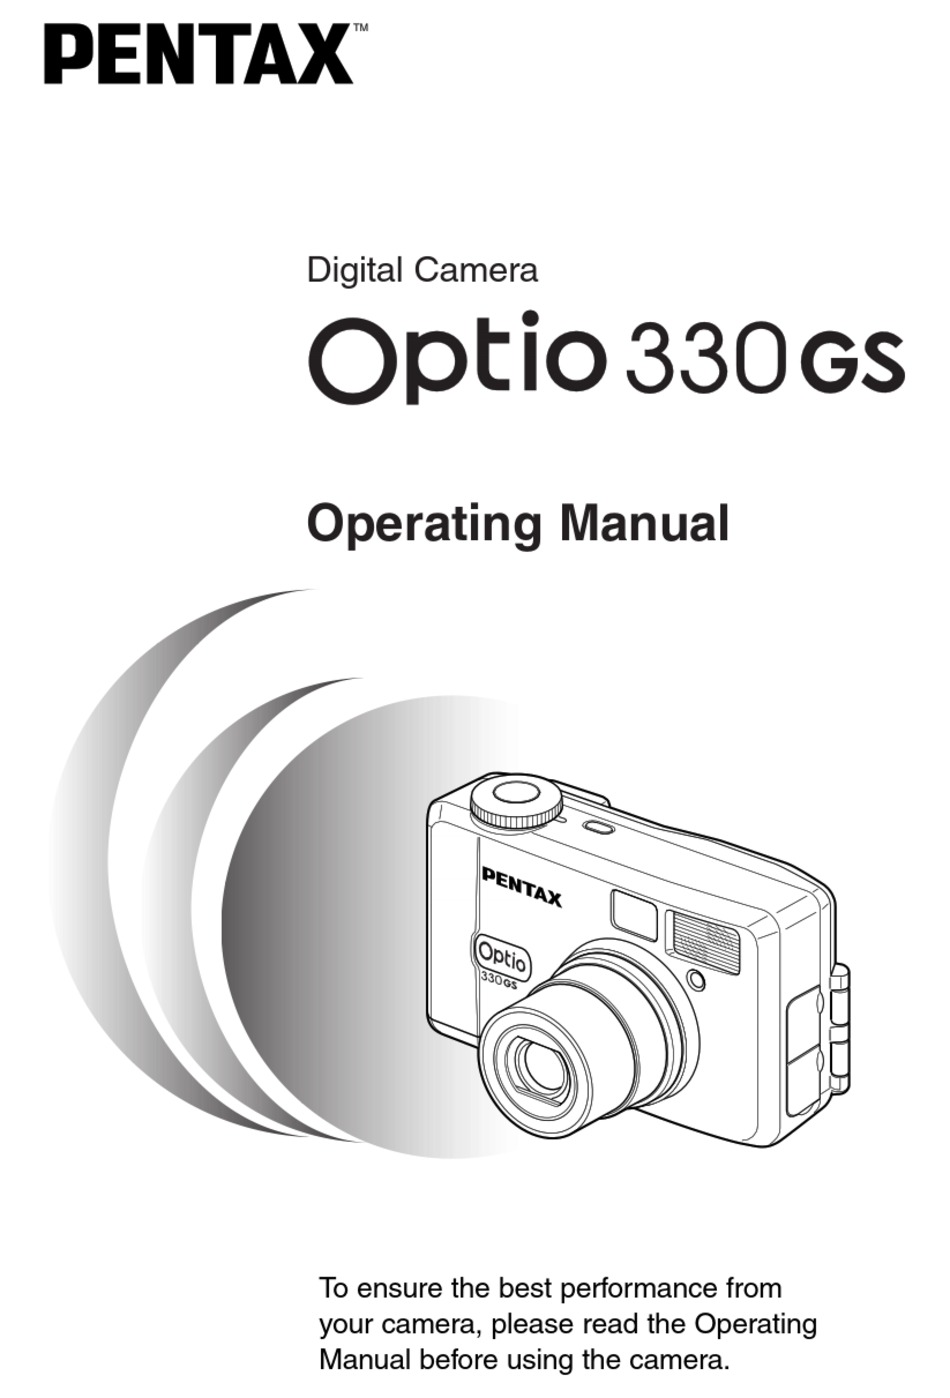 PENTAX OPTIO 330 GS OPERATING MANUAL Pdf Download | ManualsLib